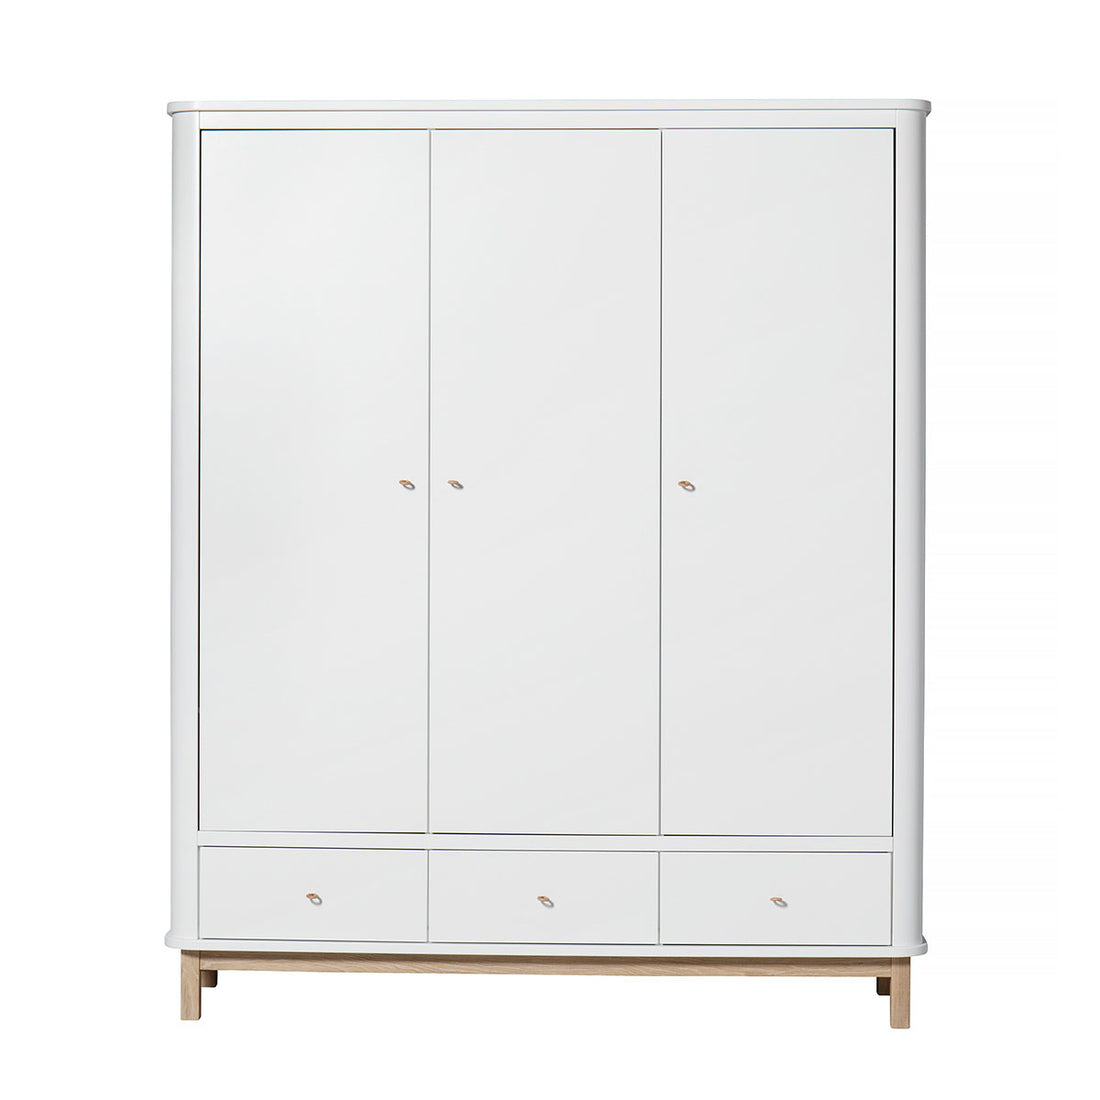 oliver-furniture-wood-wardrobe-3-doors-white-oak- (1)